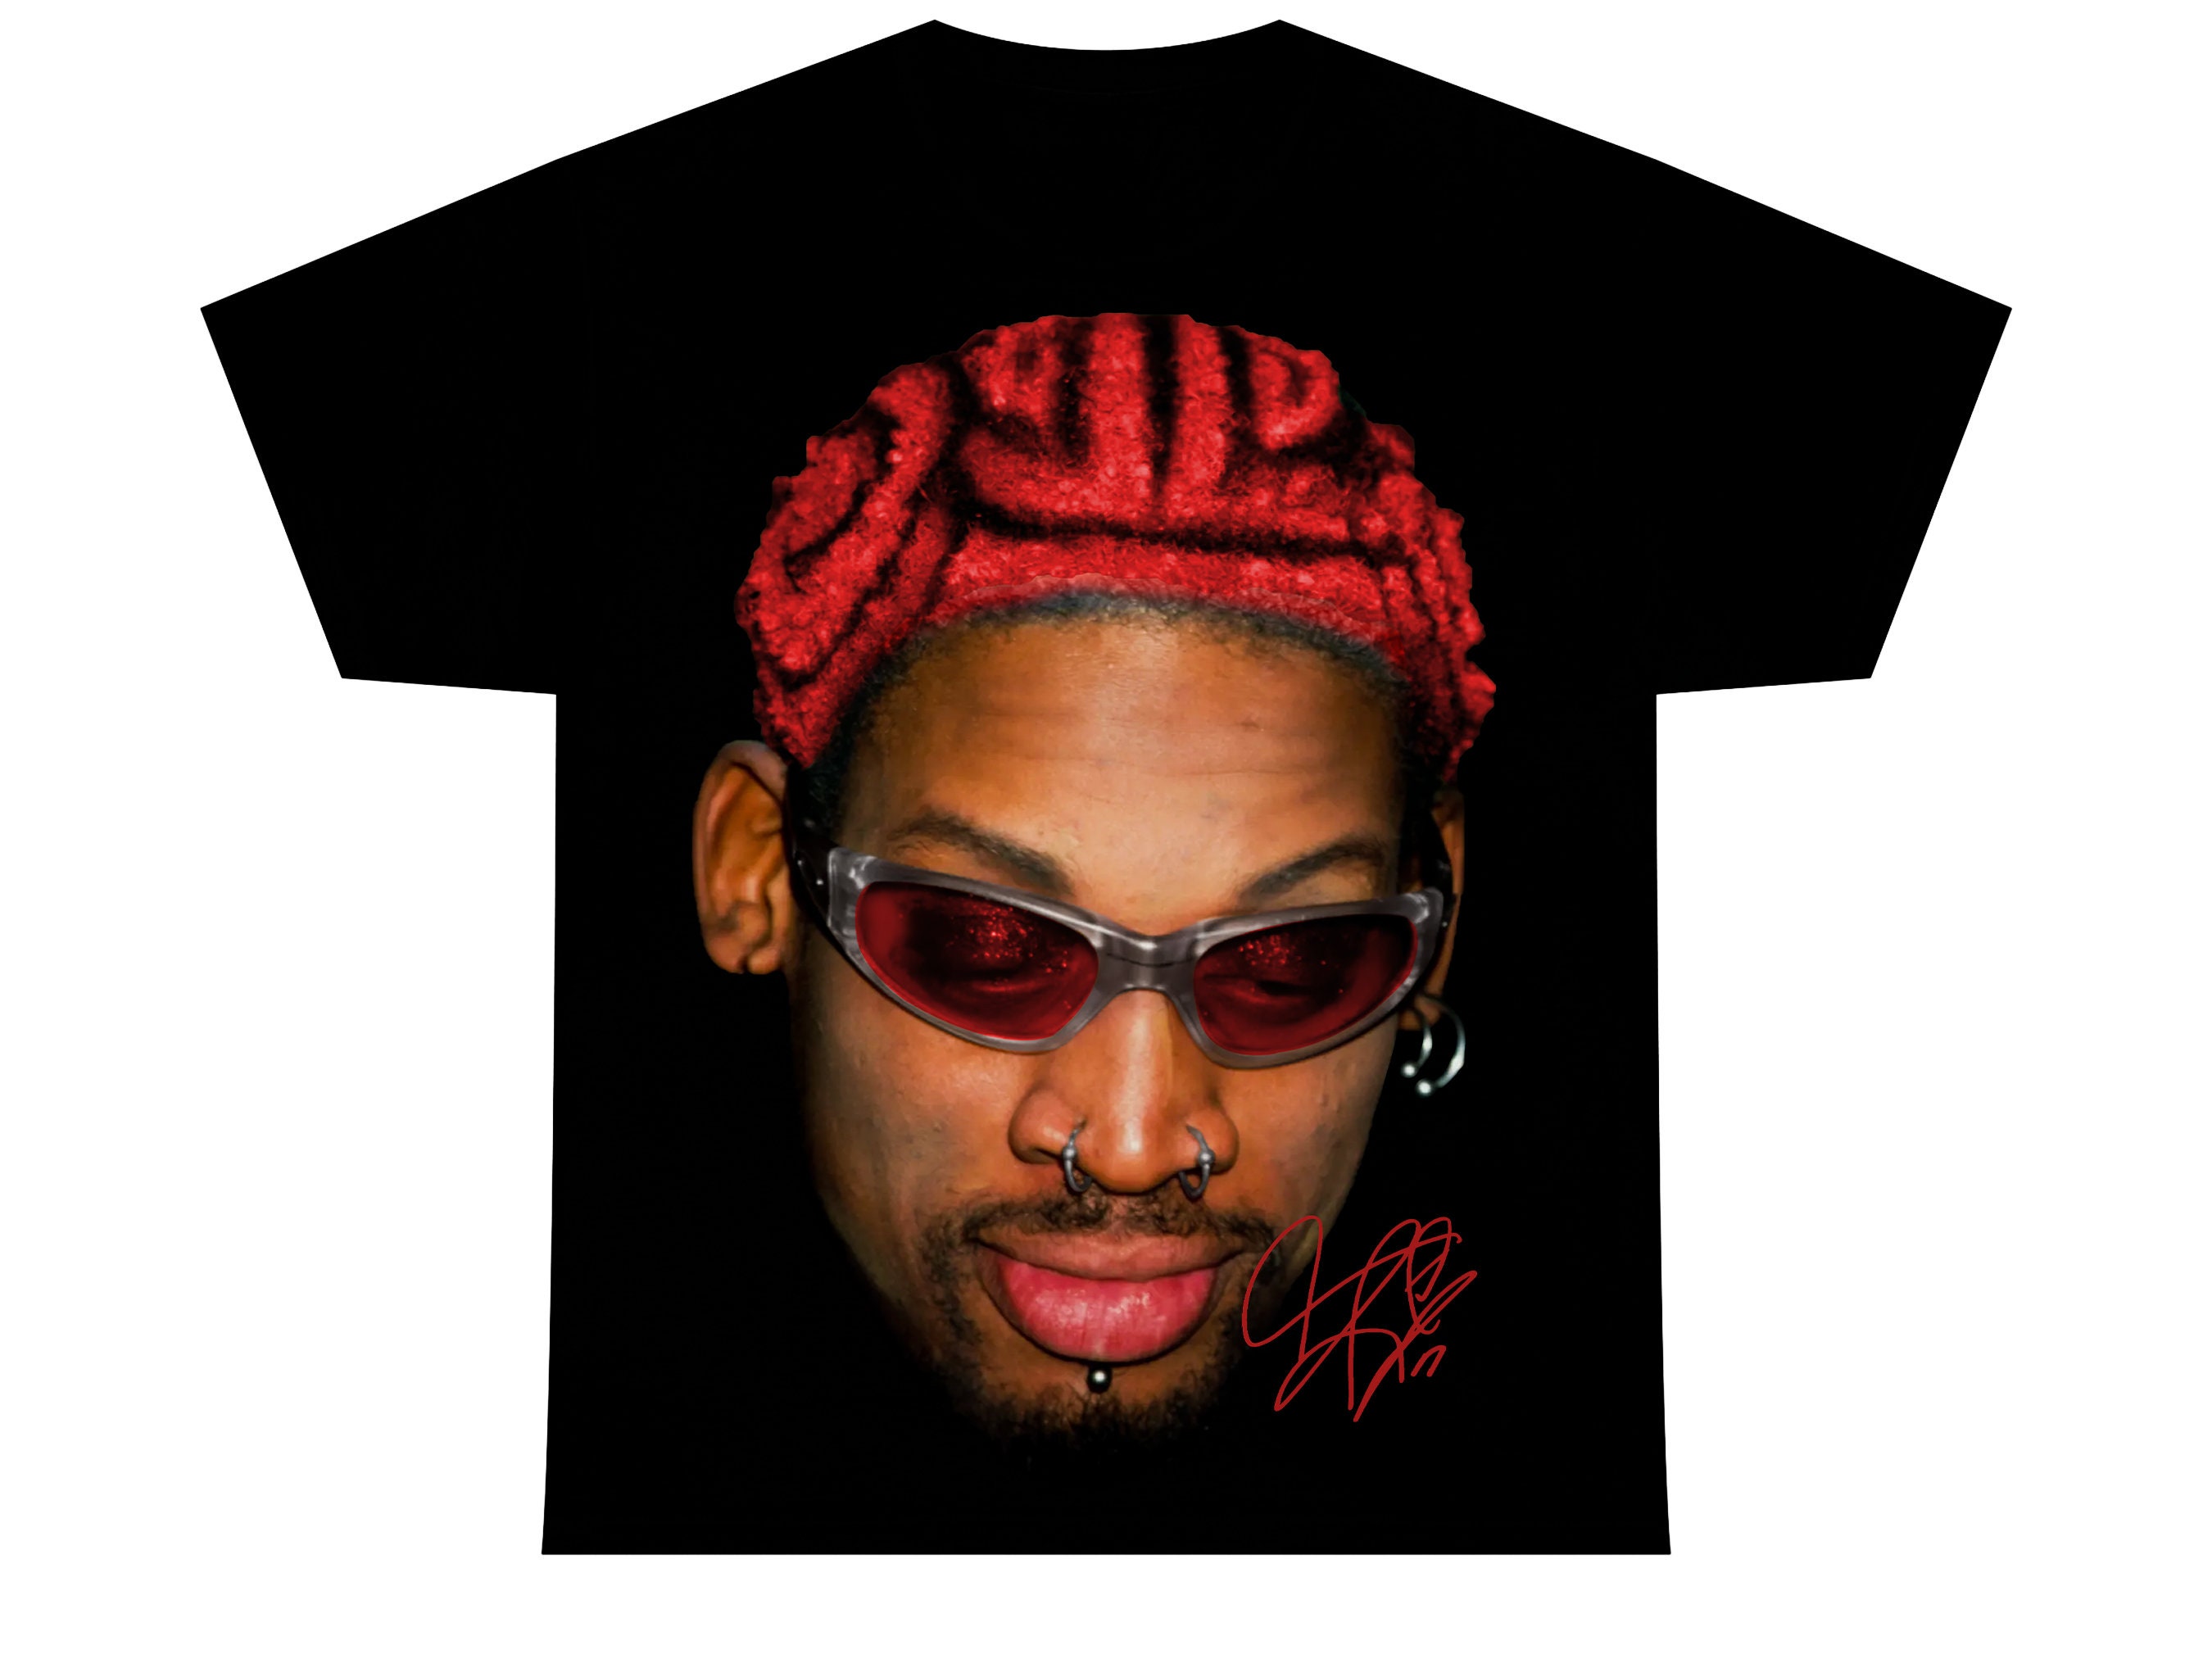 Shirts, Vintage Chicago Bulls Rap Tee Shirt Michael Jordan Scottie Pippen  Dennis Rodman